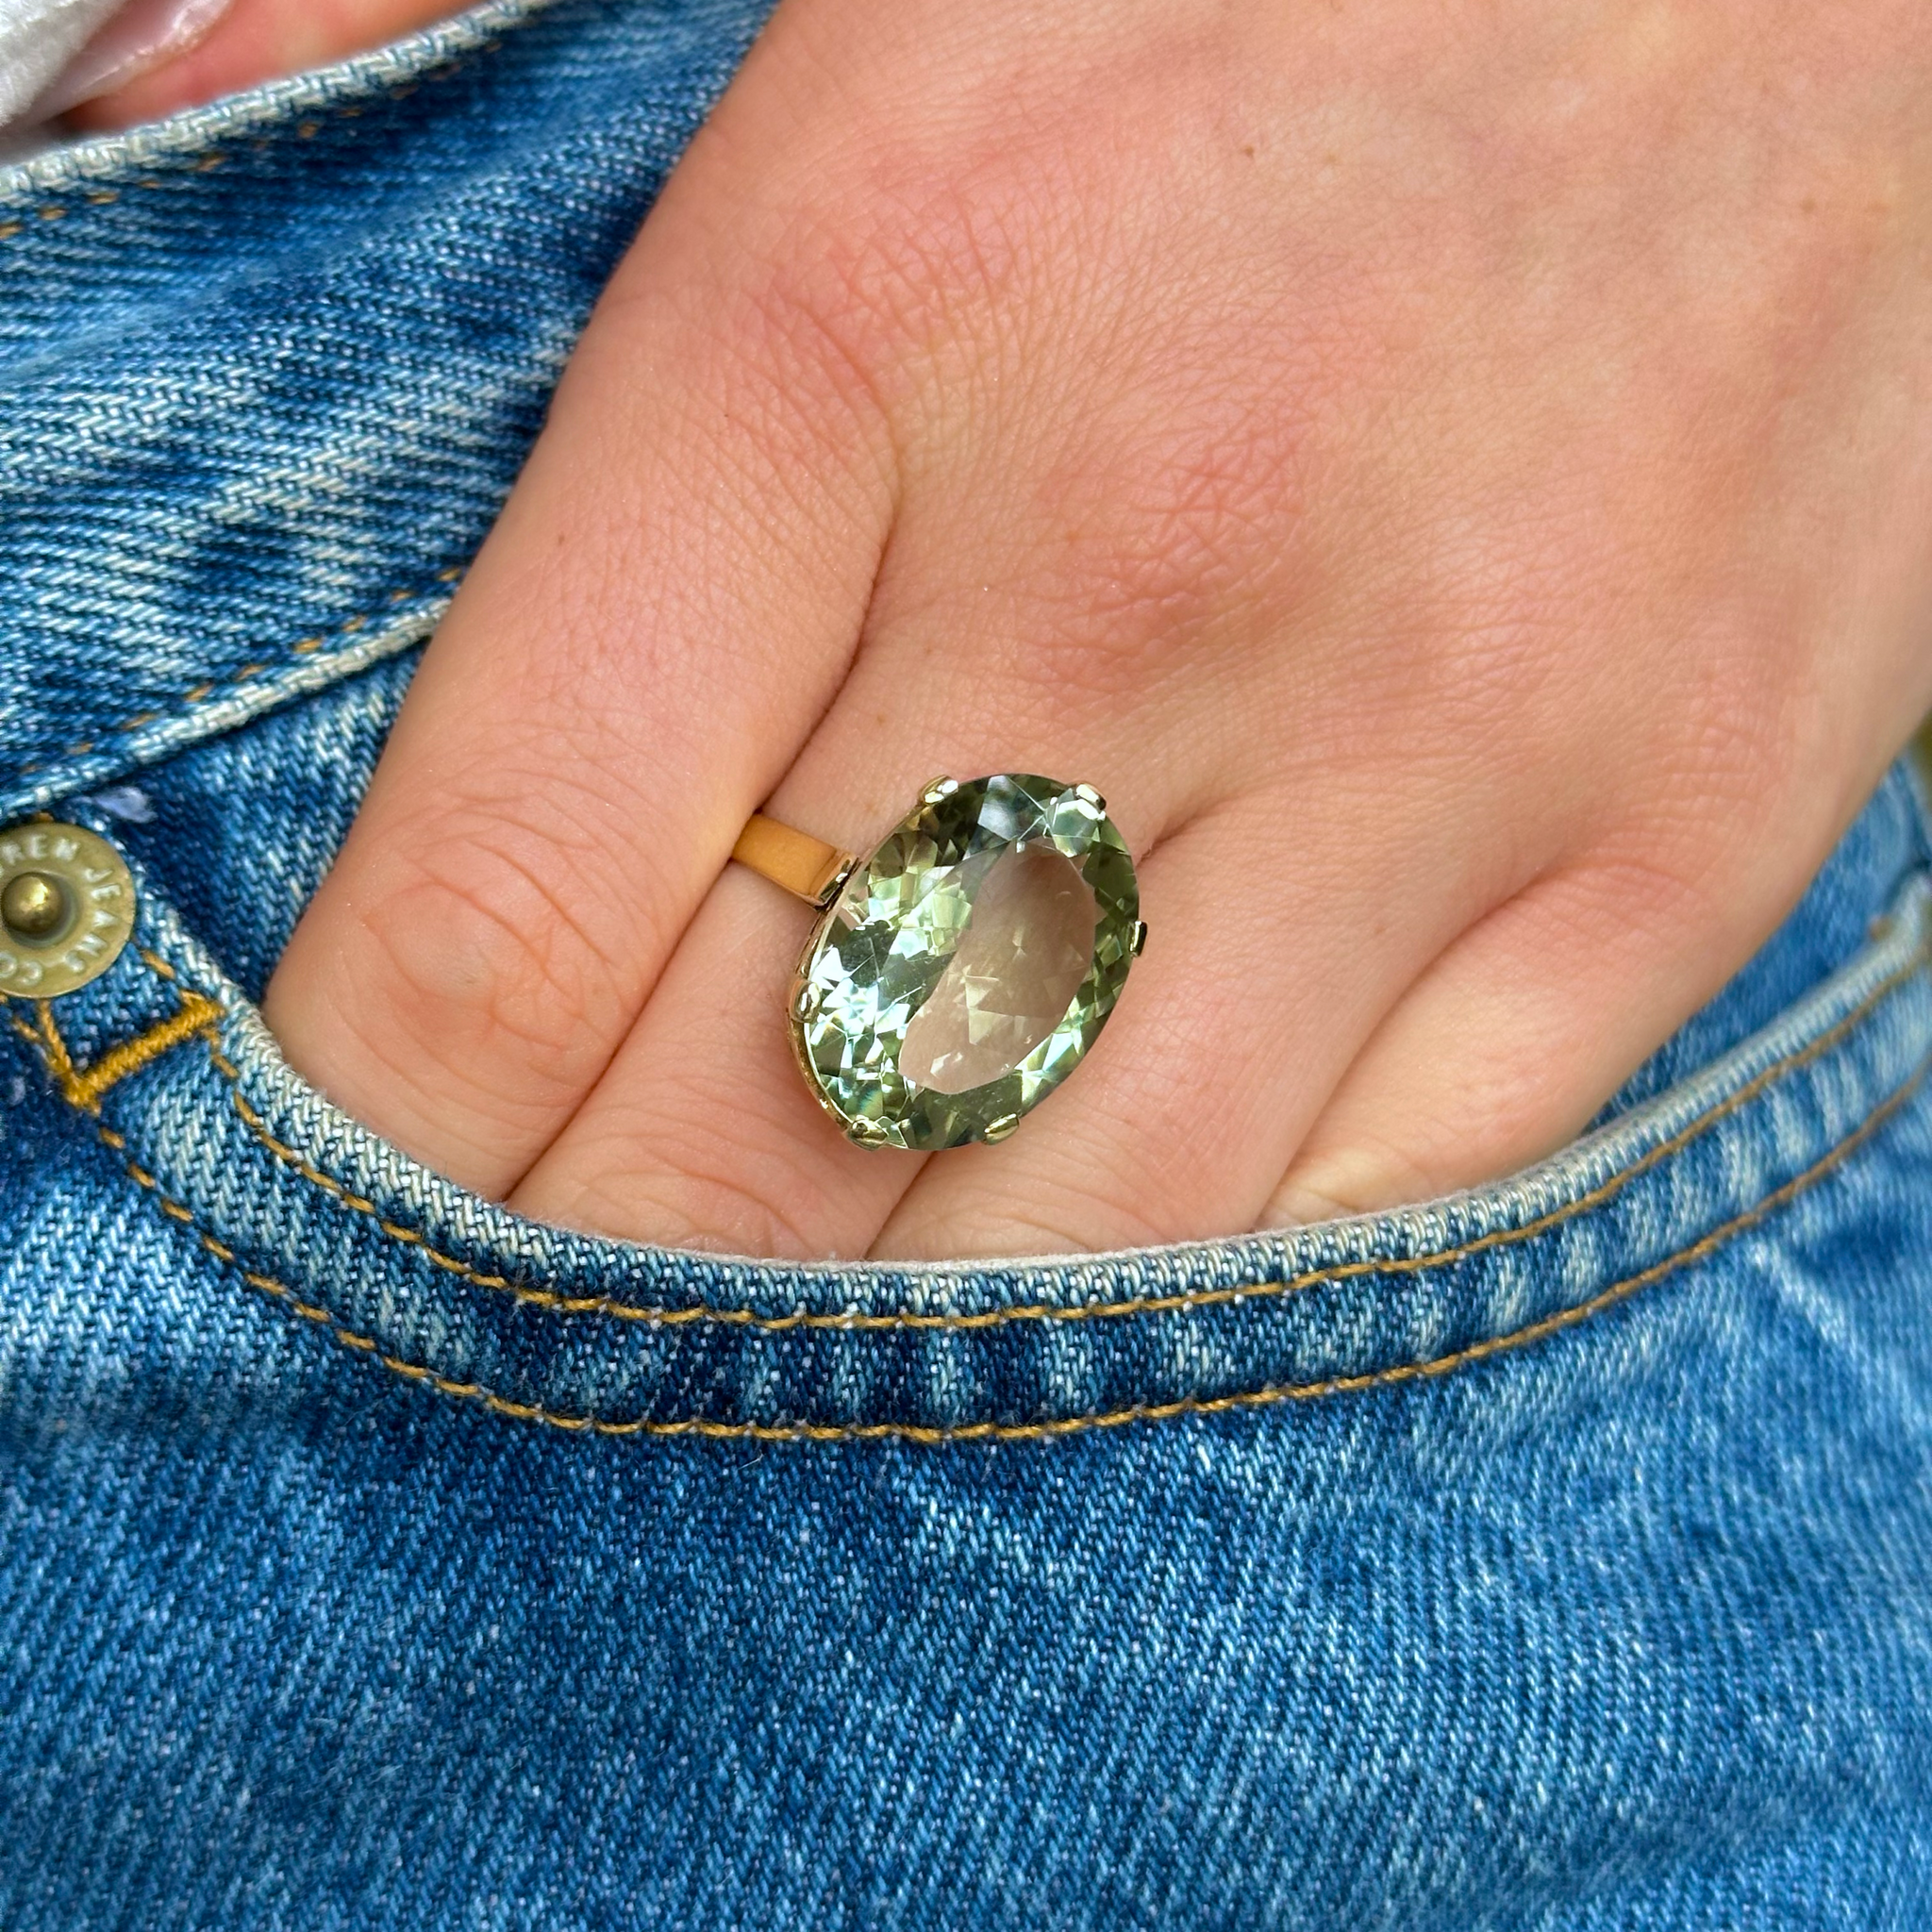 Vintage, Mint Quartz Cocktail Ring, worn on hand in pocket of jeans